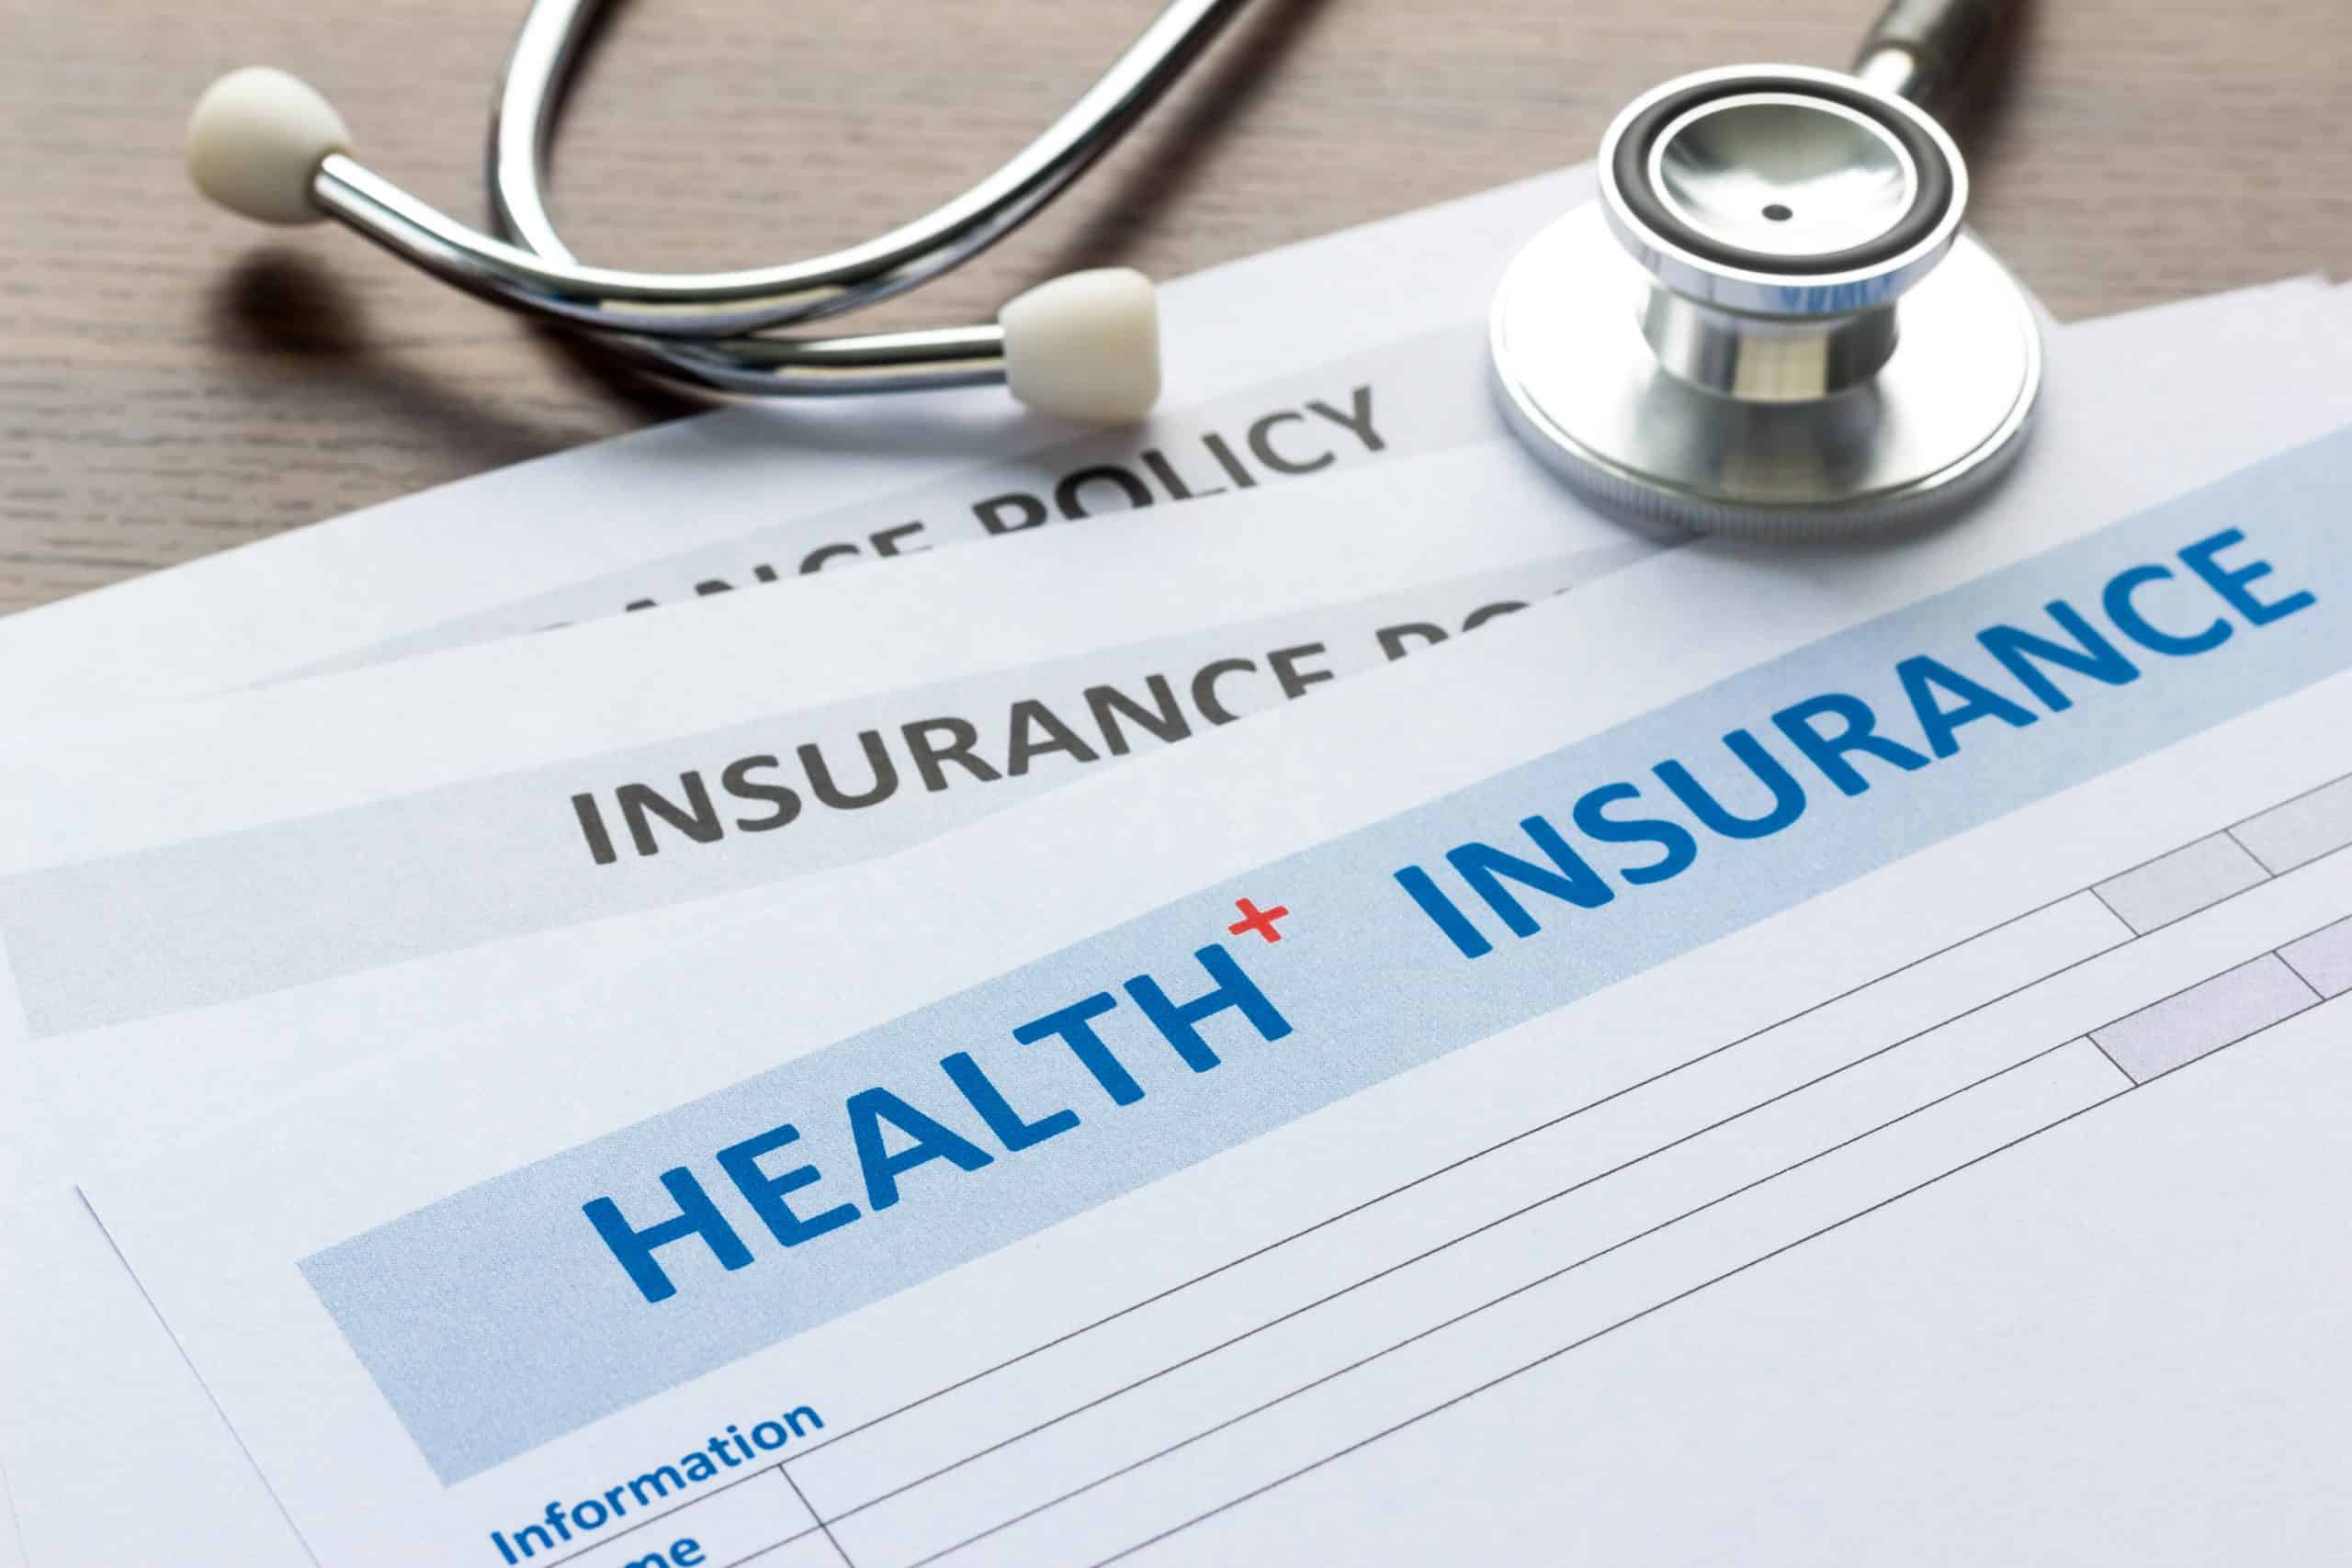 Health insurance documents